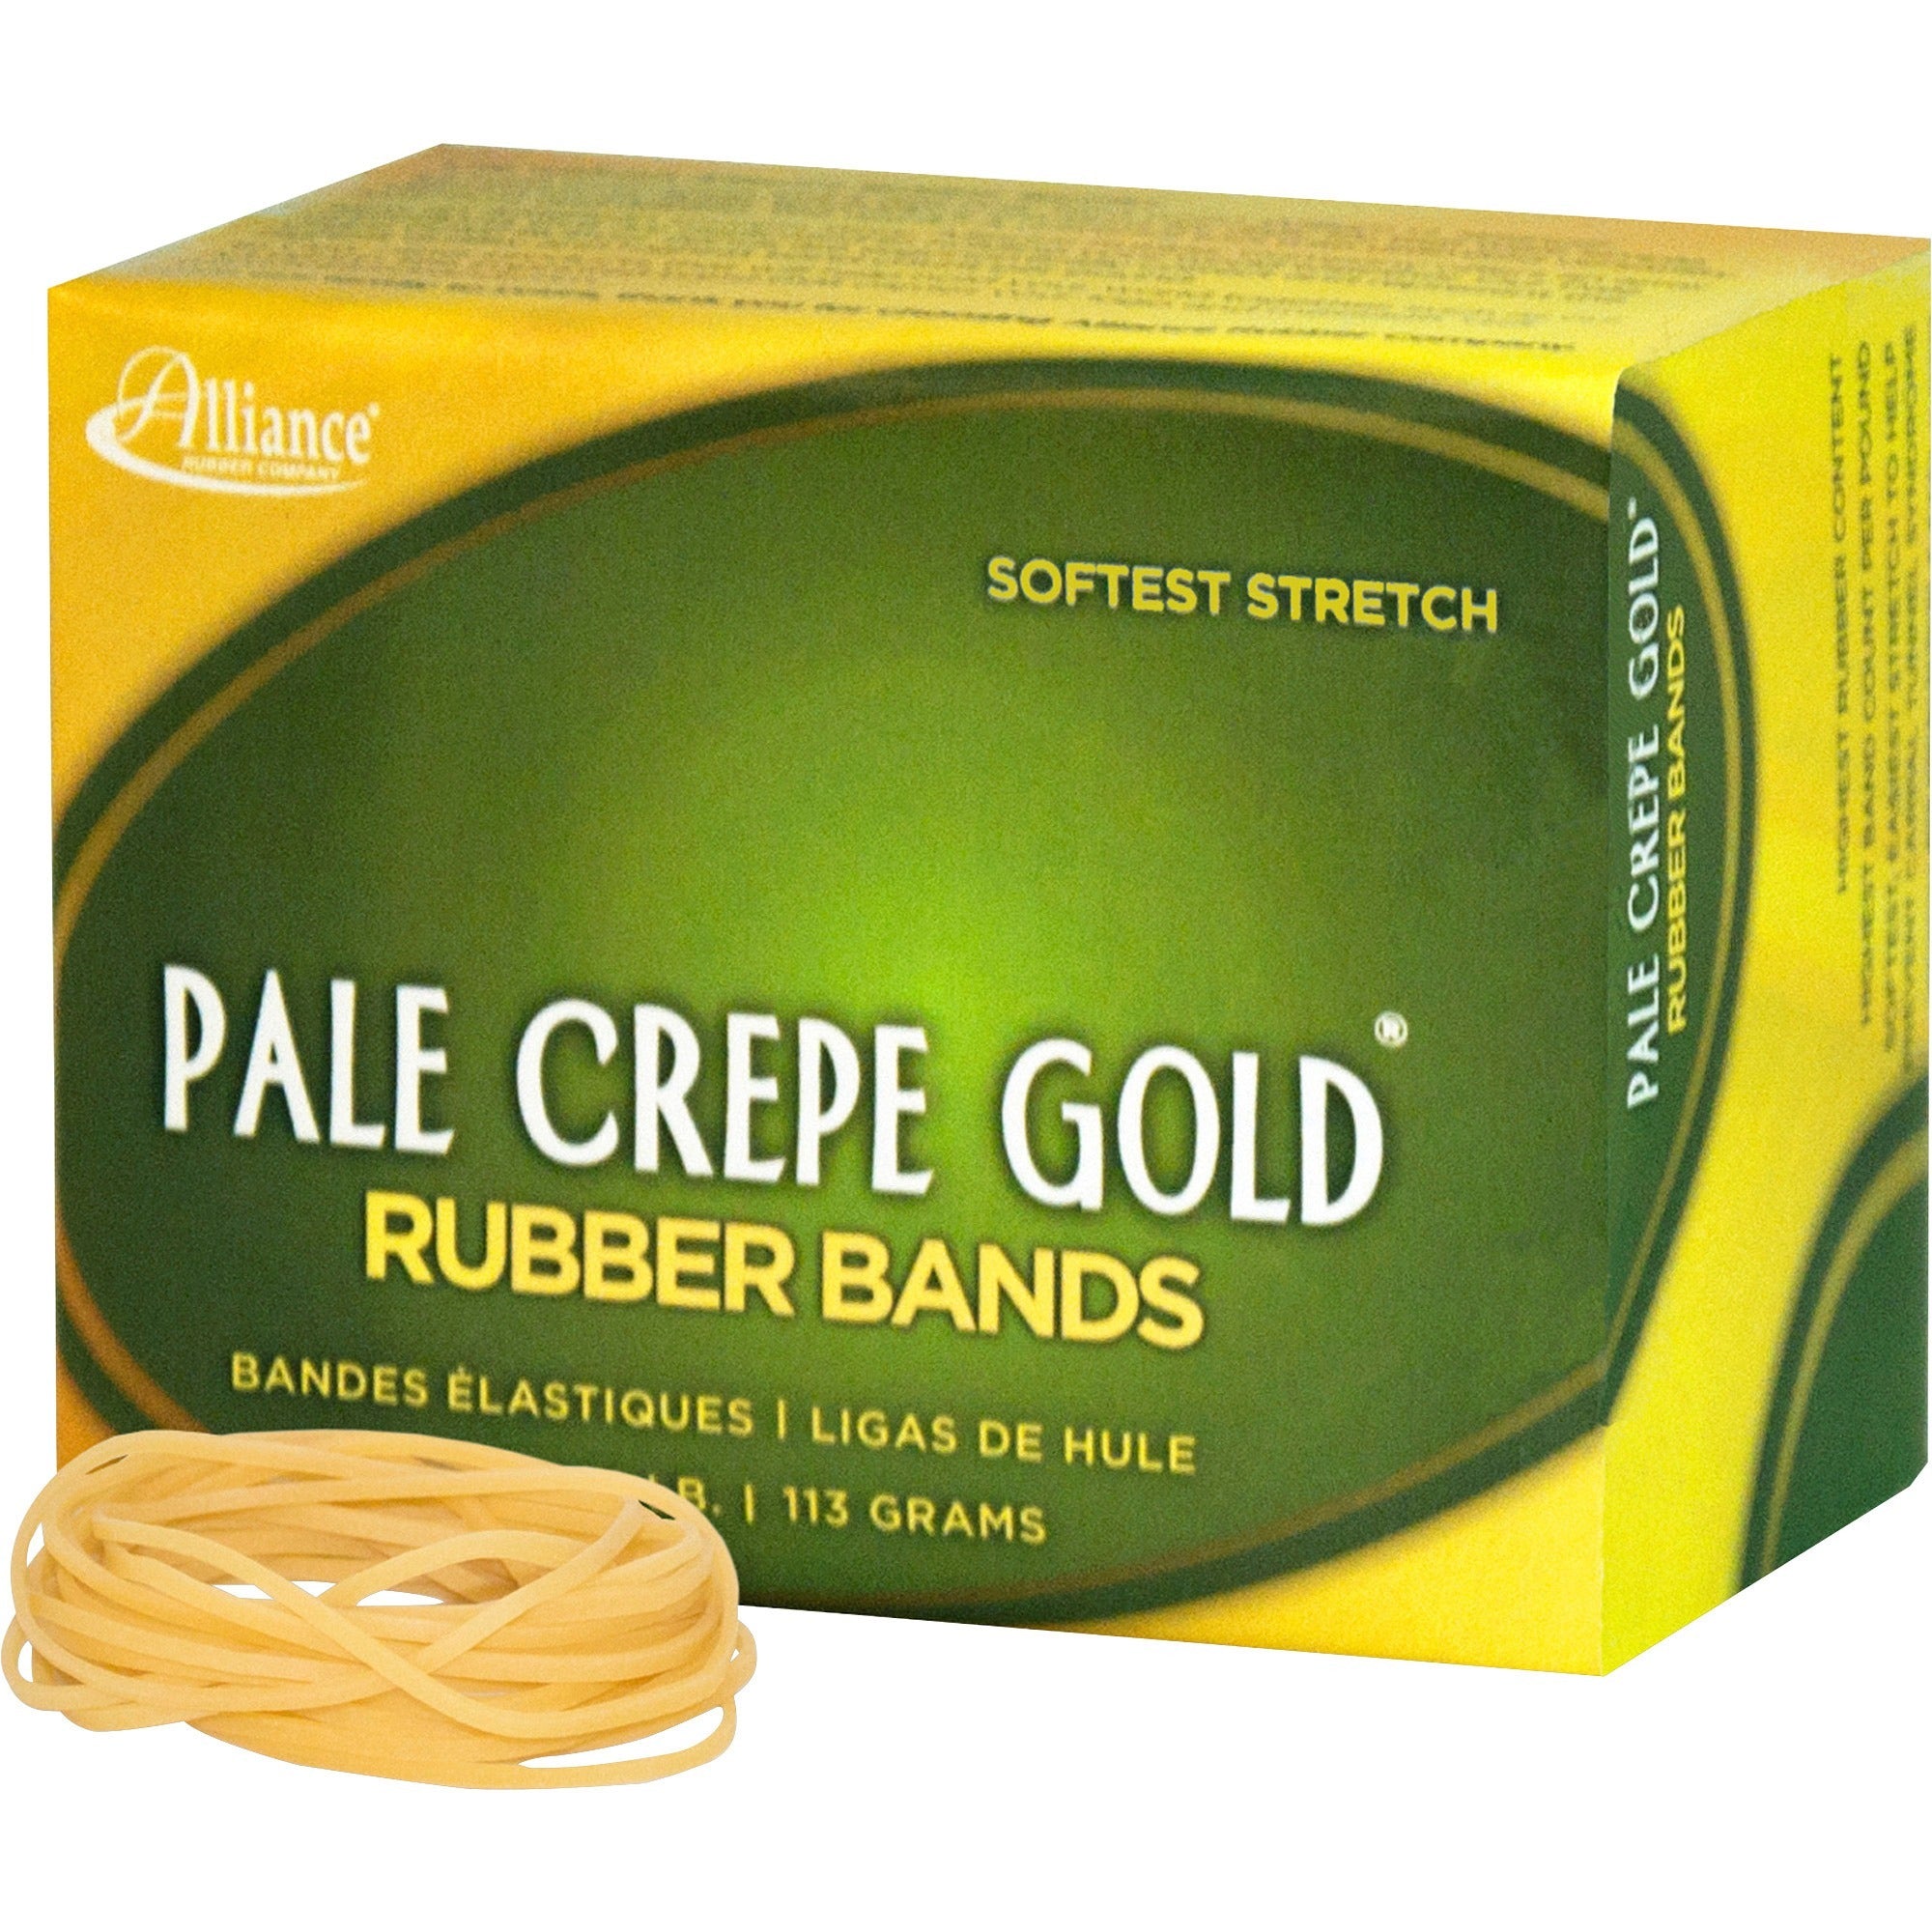 Alliance Rubber 20169 Pale Crepe Gold Rubber Bands - Size #16 - Approx. 668 Bands - 2 1/2" x 1/16" - Golden Crepe - 1/4 lb Box - 